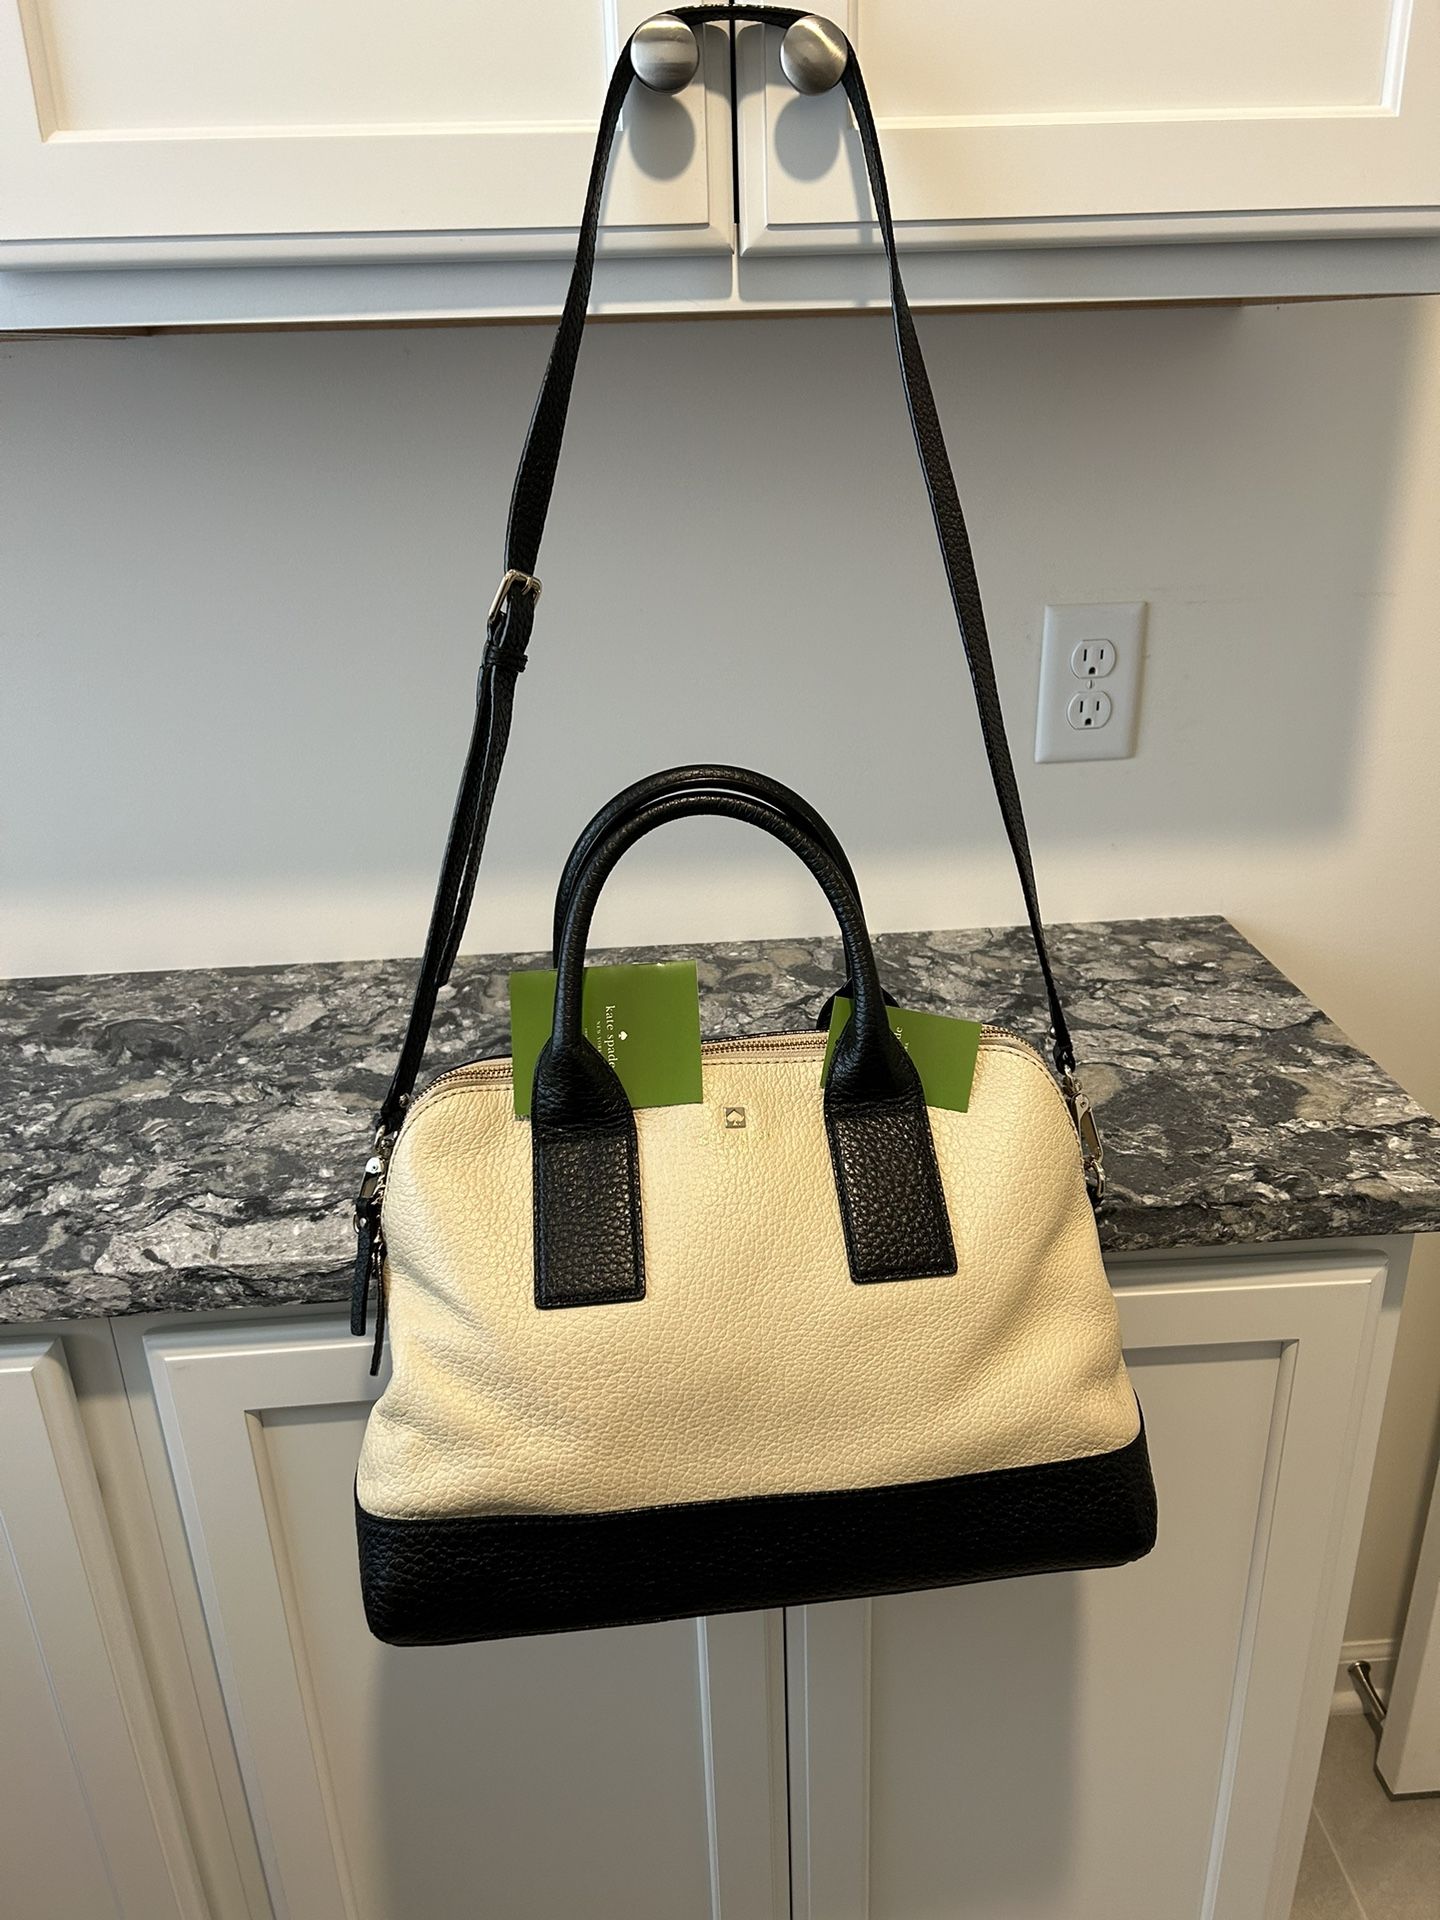 New Kate Spade handbag, $40